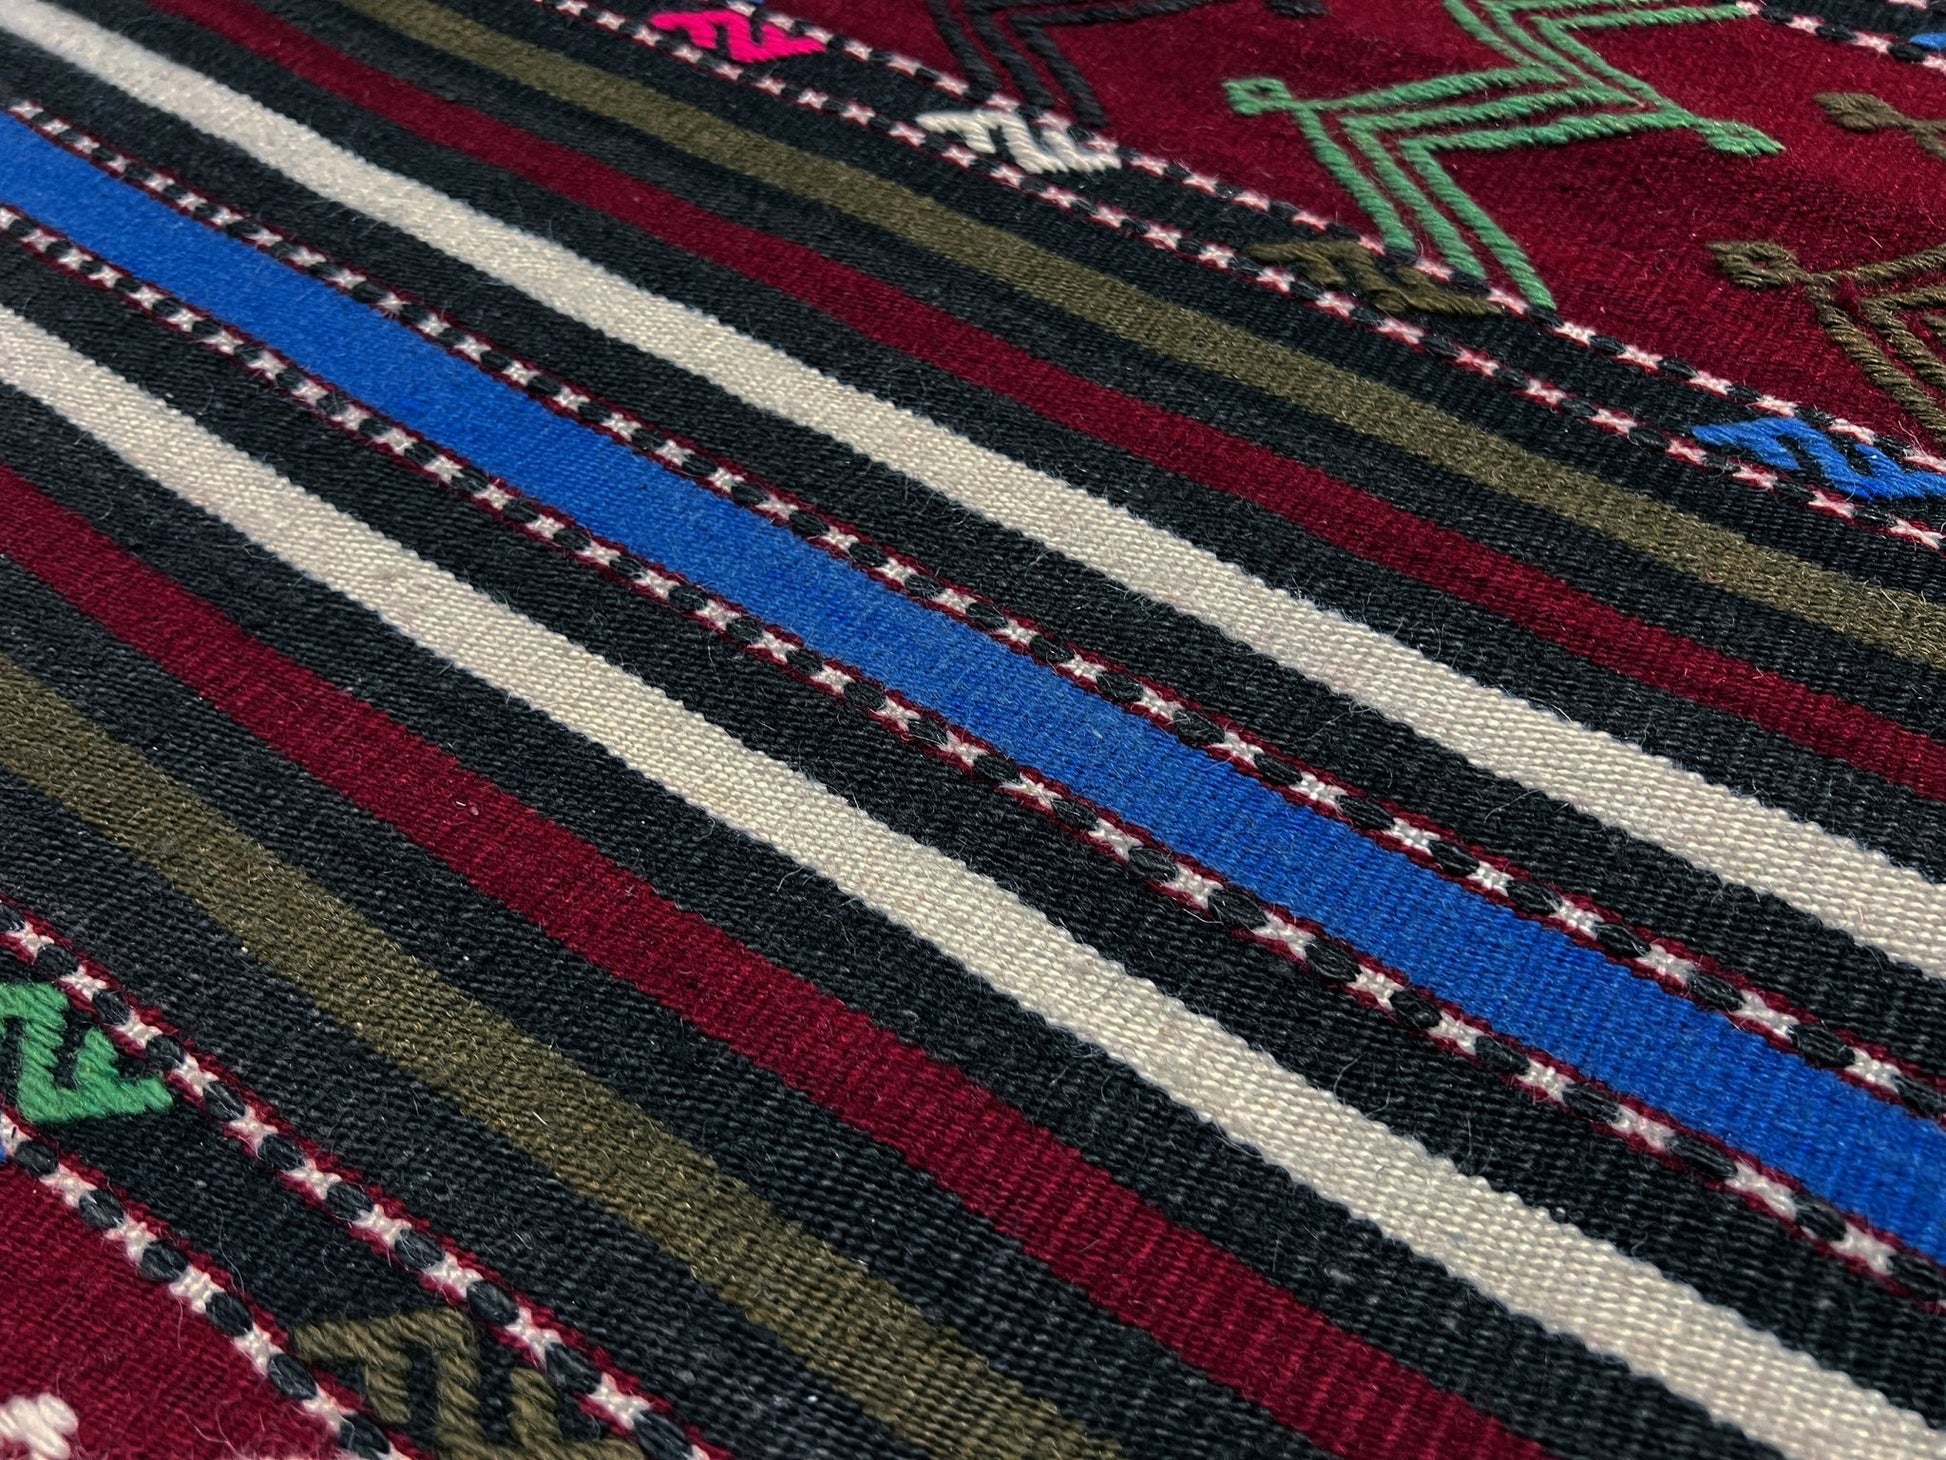 Canakkale Handmade vintage turkish kilim rug shop san francisco bay area.